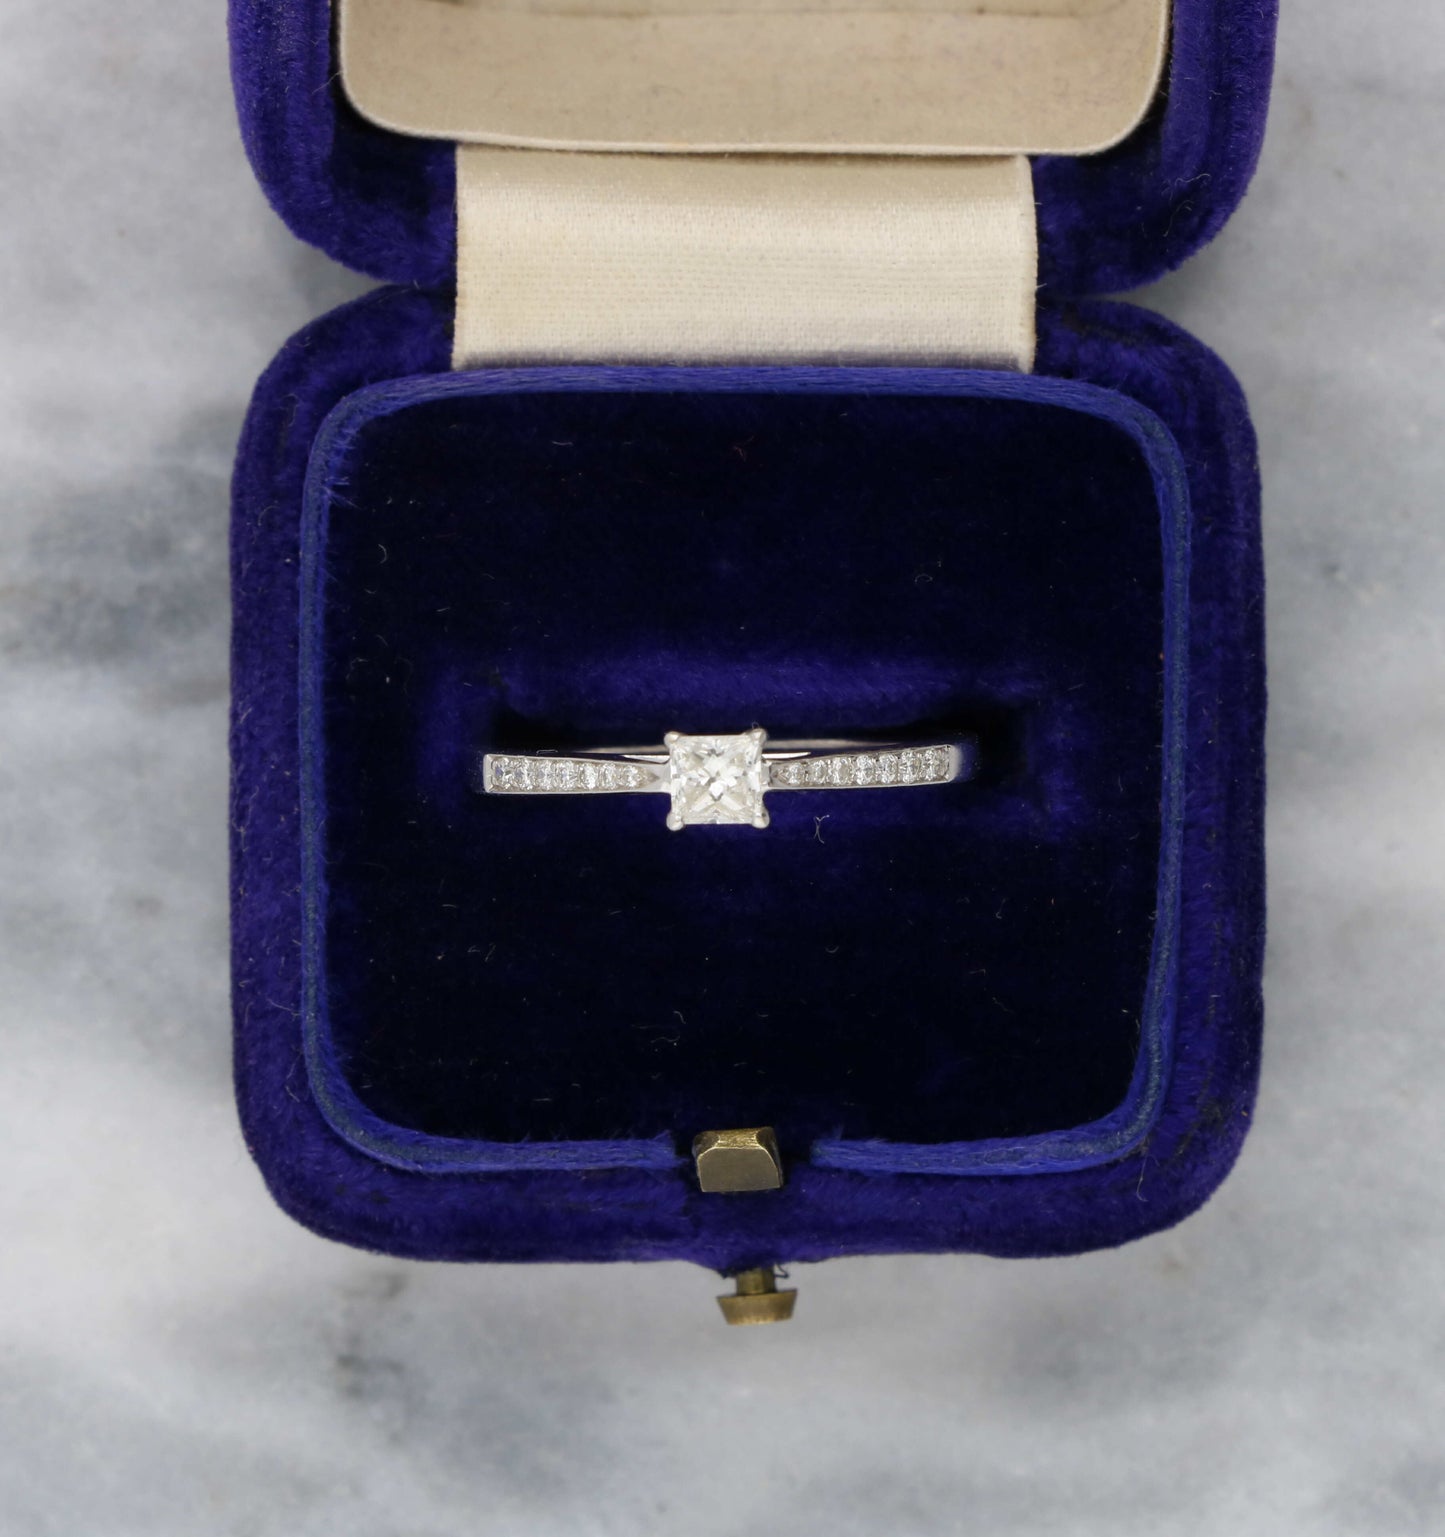 18ct princess-cut diamond engagement ring